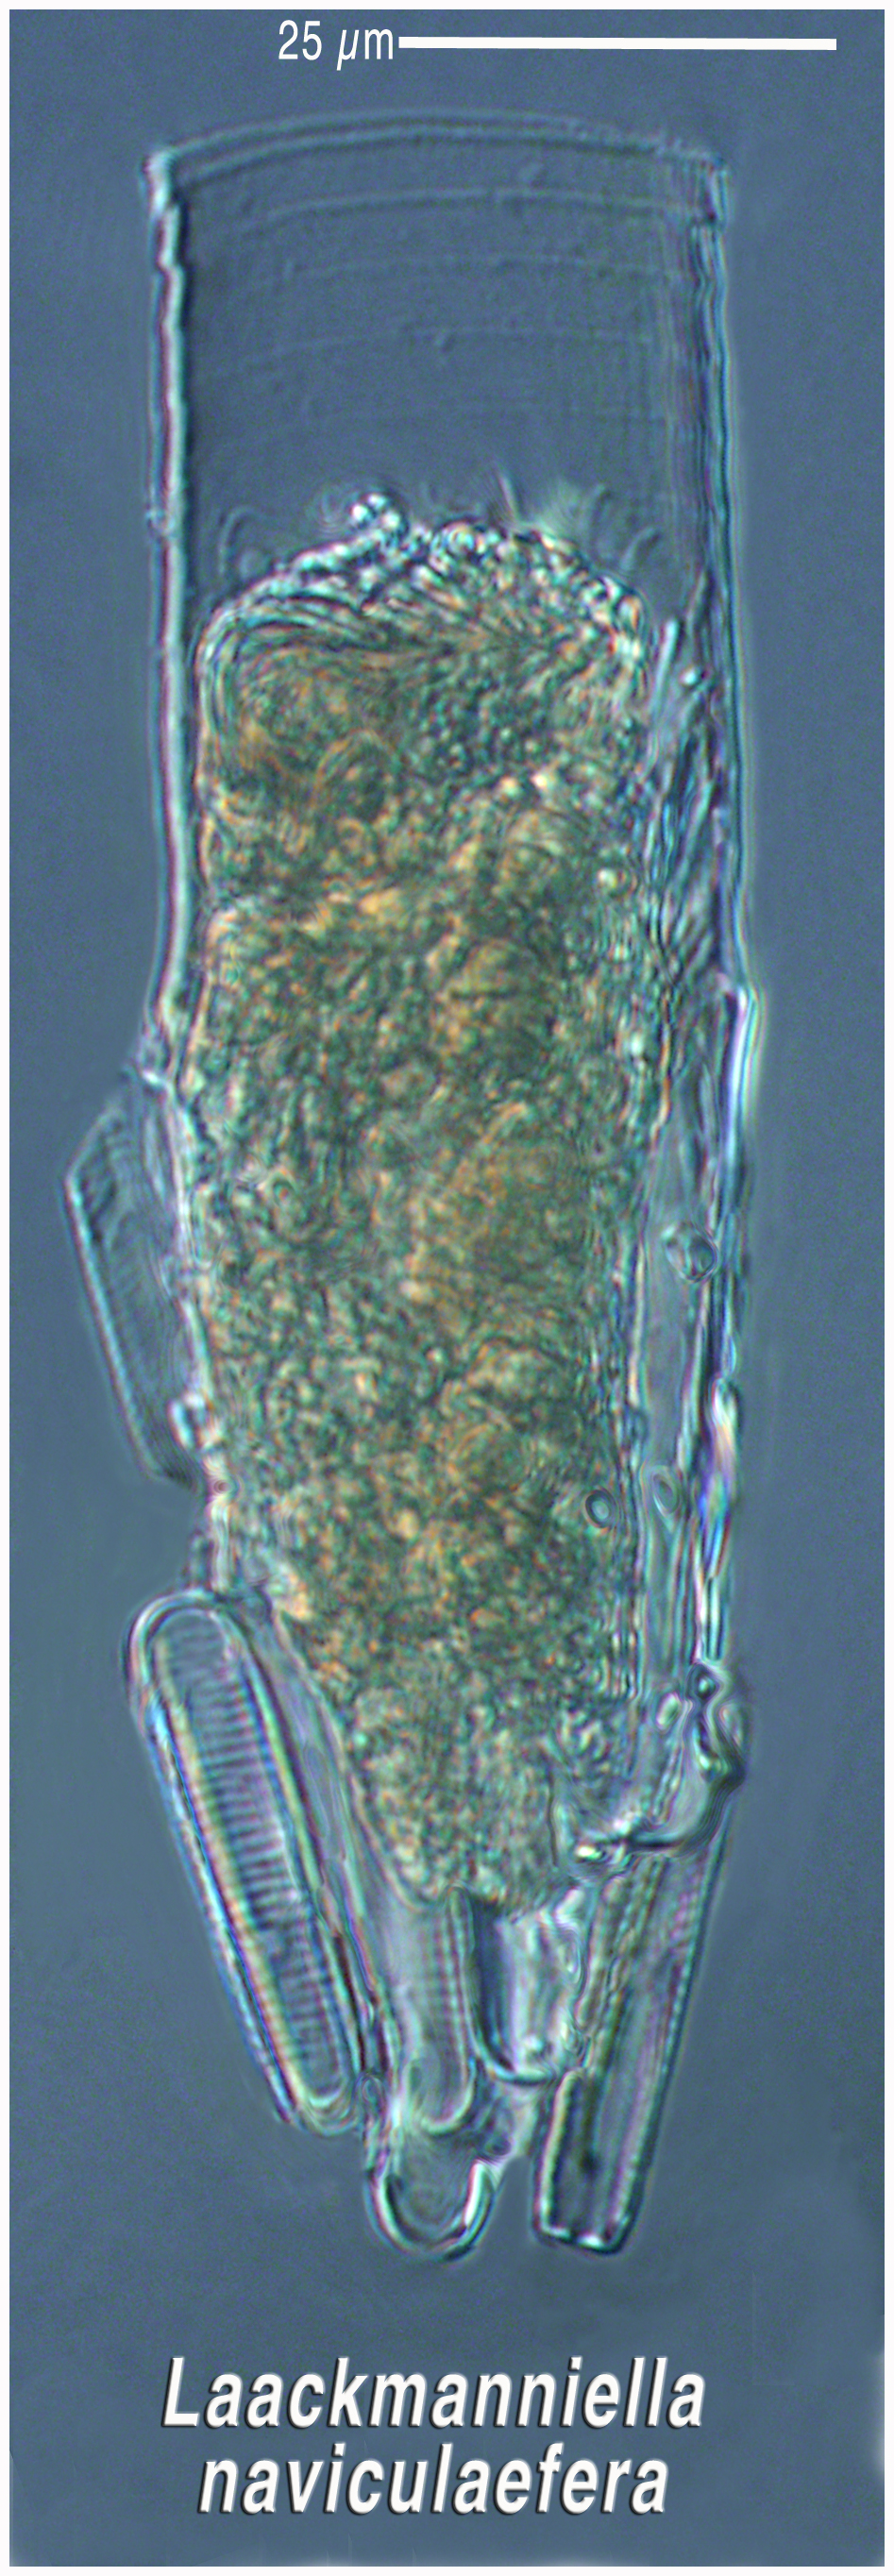 Laackmanniella naviculaefera